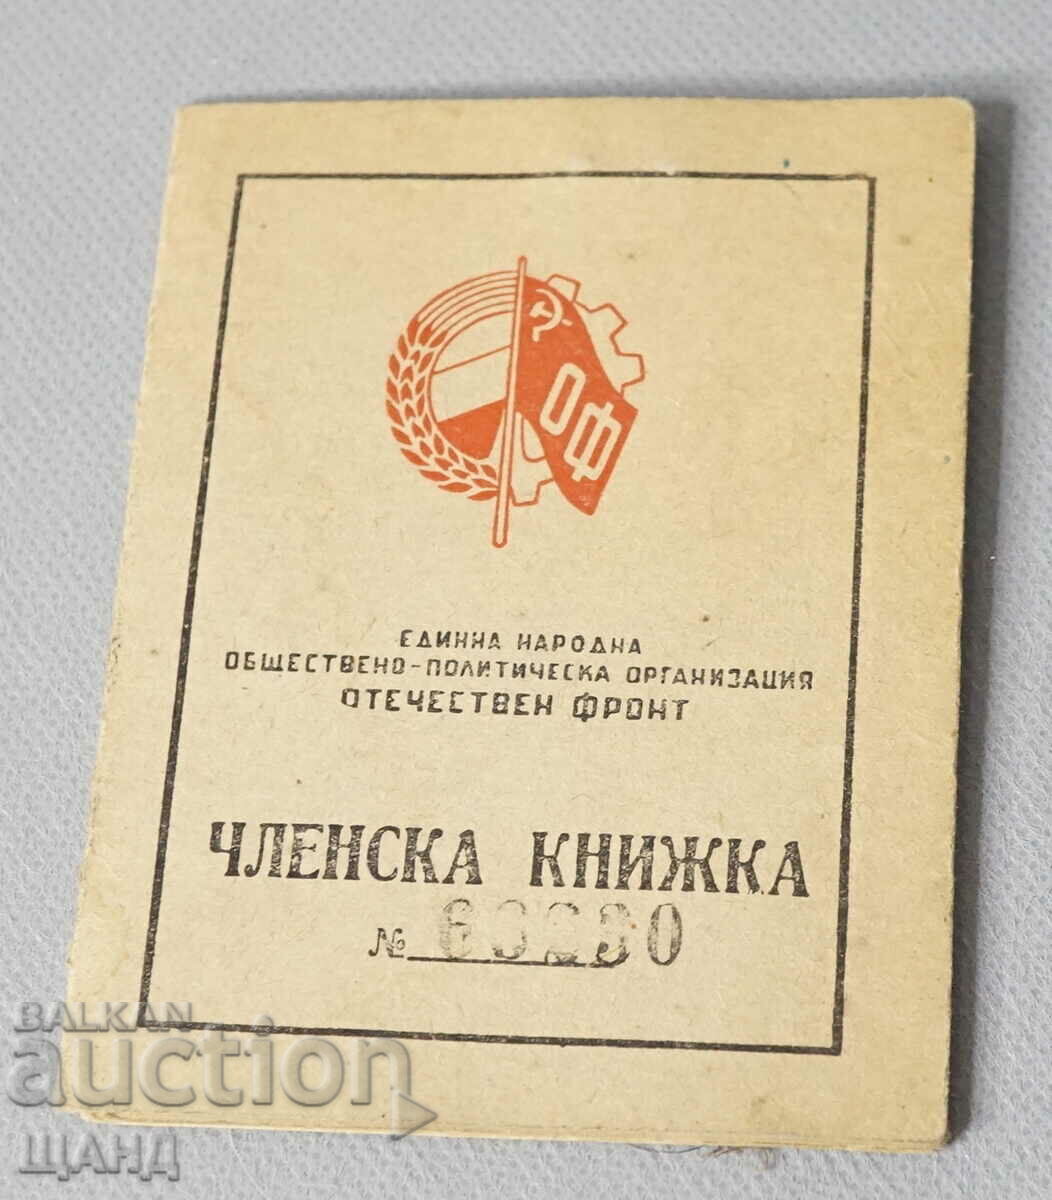 1948 Membership card Political organization Patriotic Front